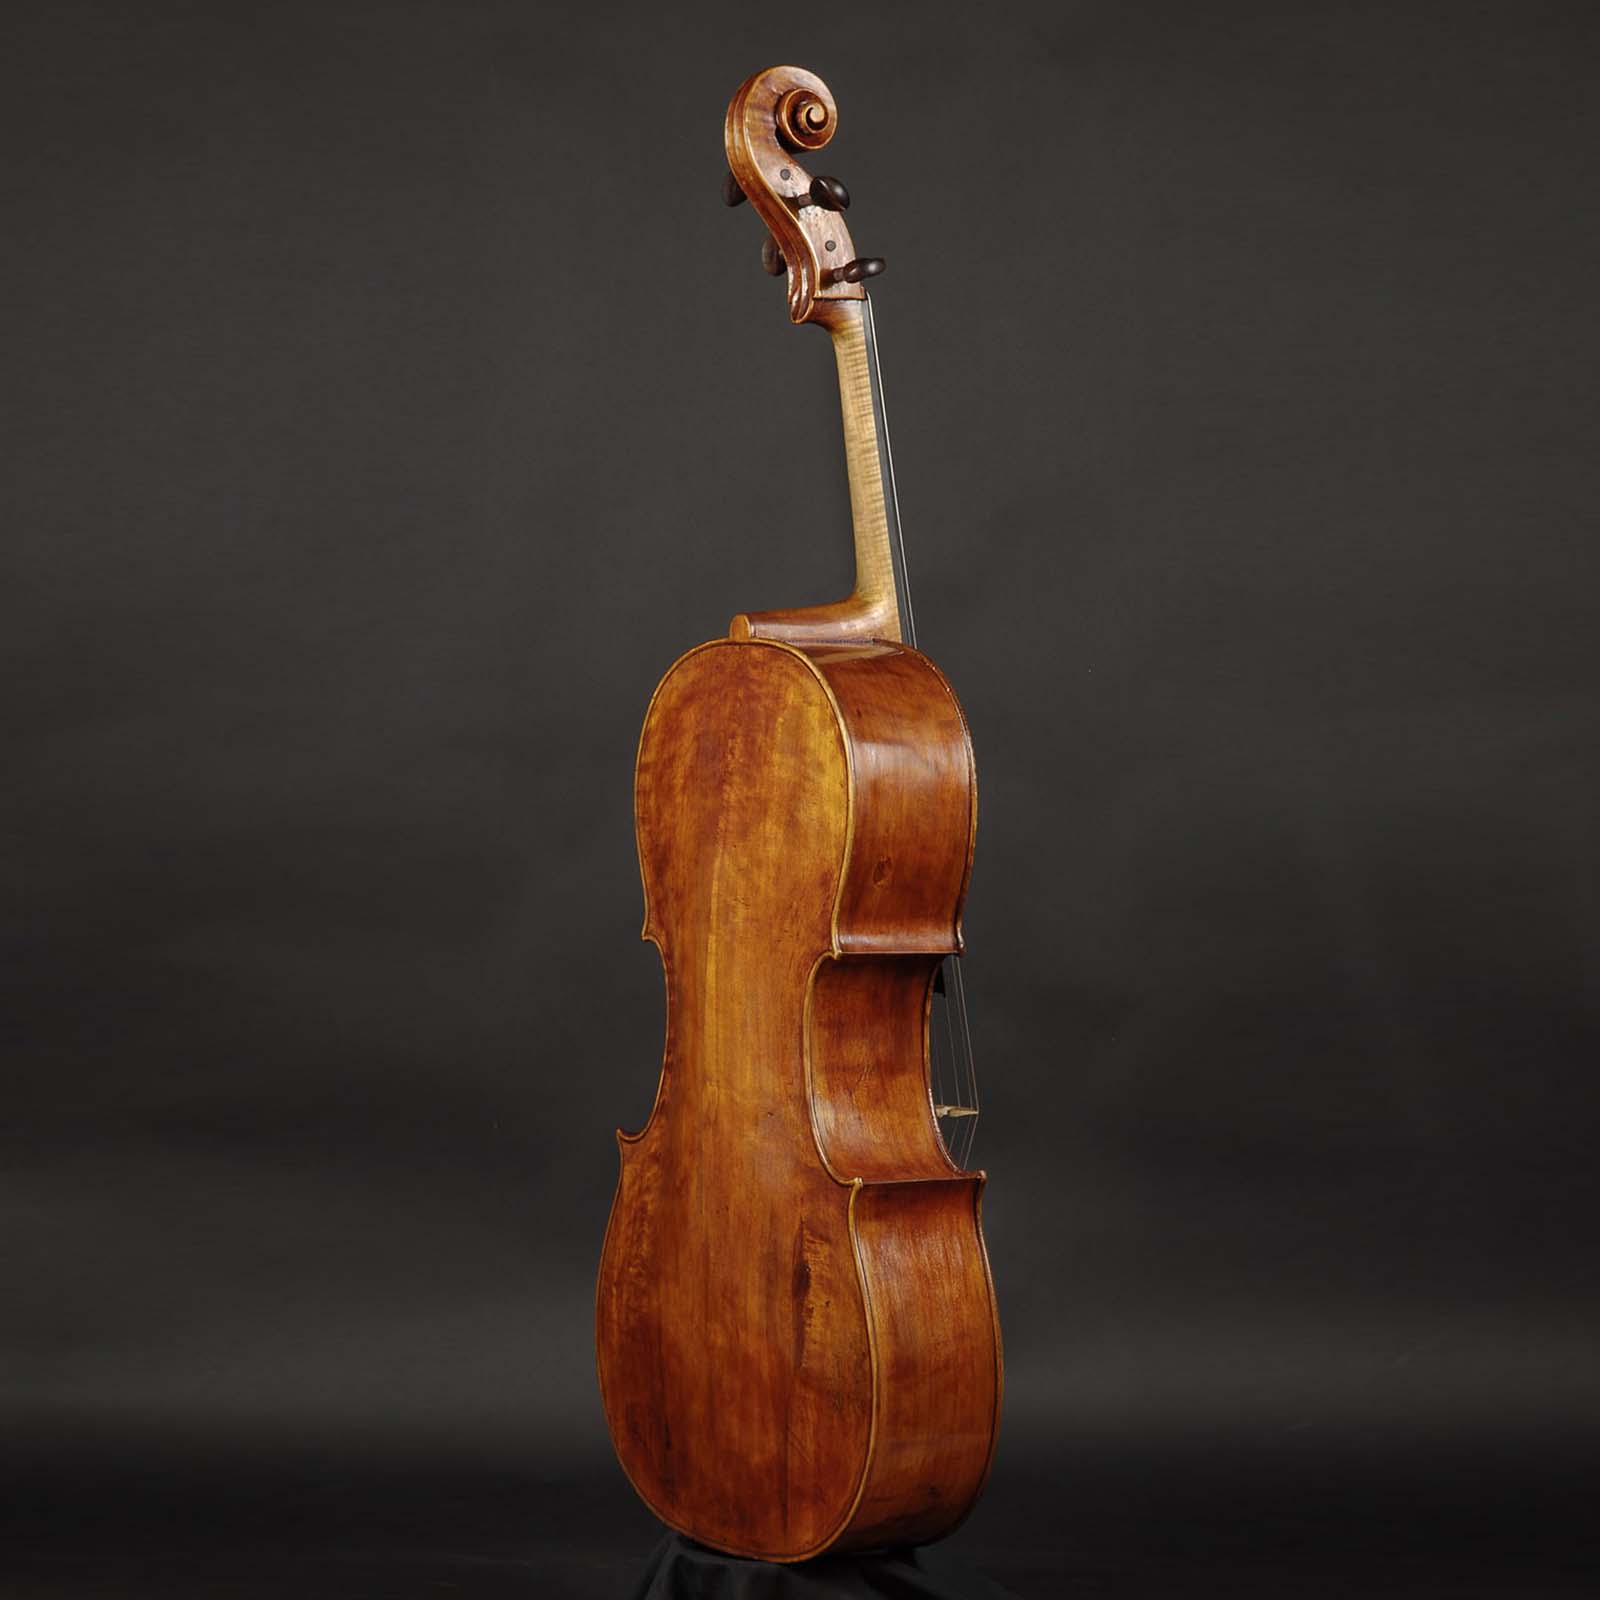 Antonio Stradivari Cremona 1730 “Feuermann“ “Maremmano“ - Image 4